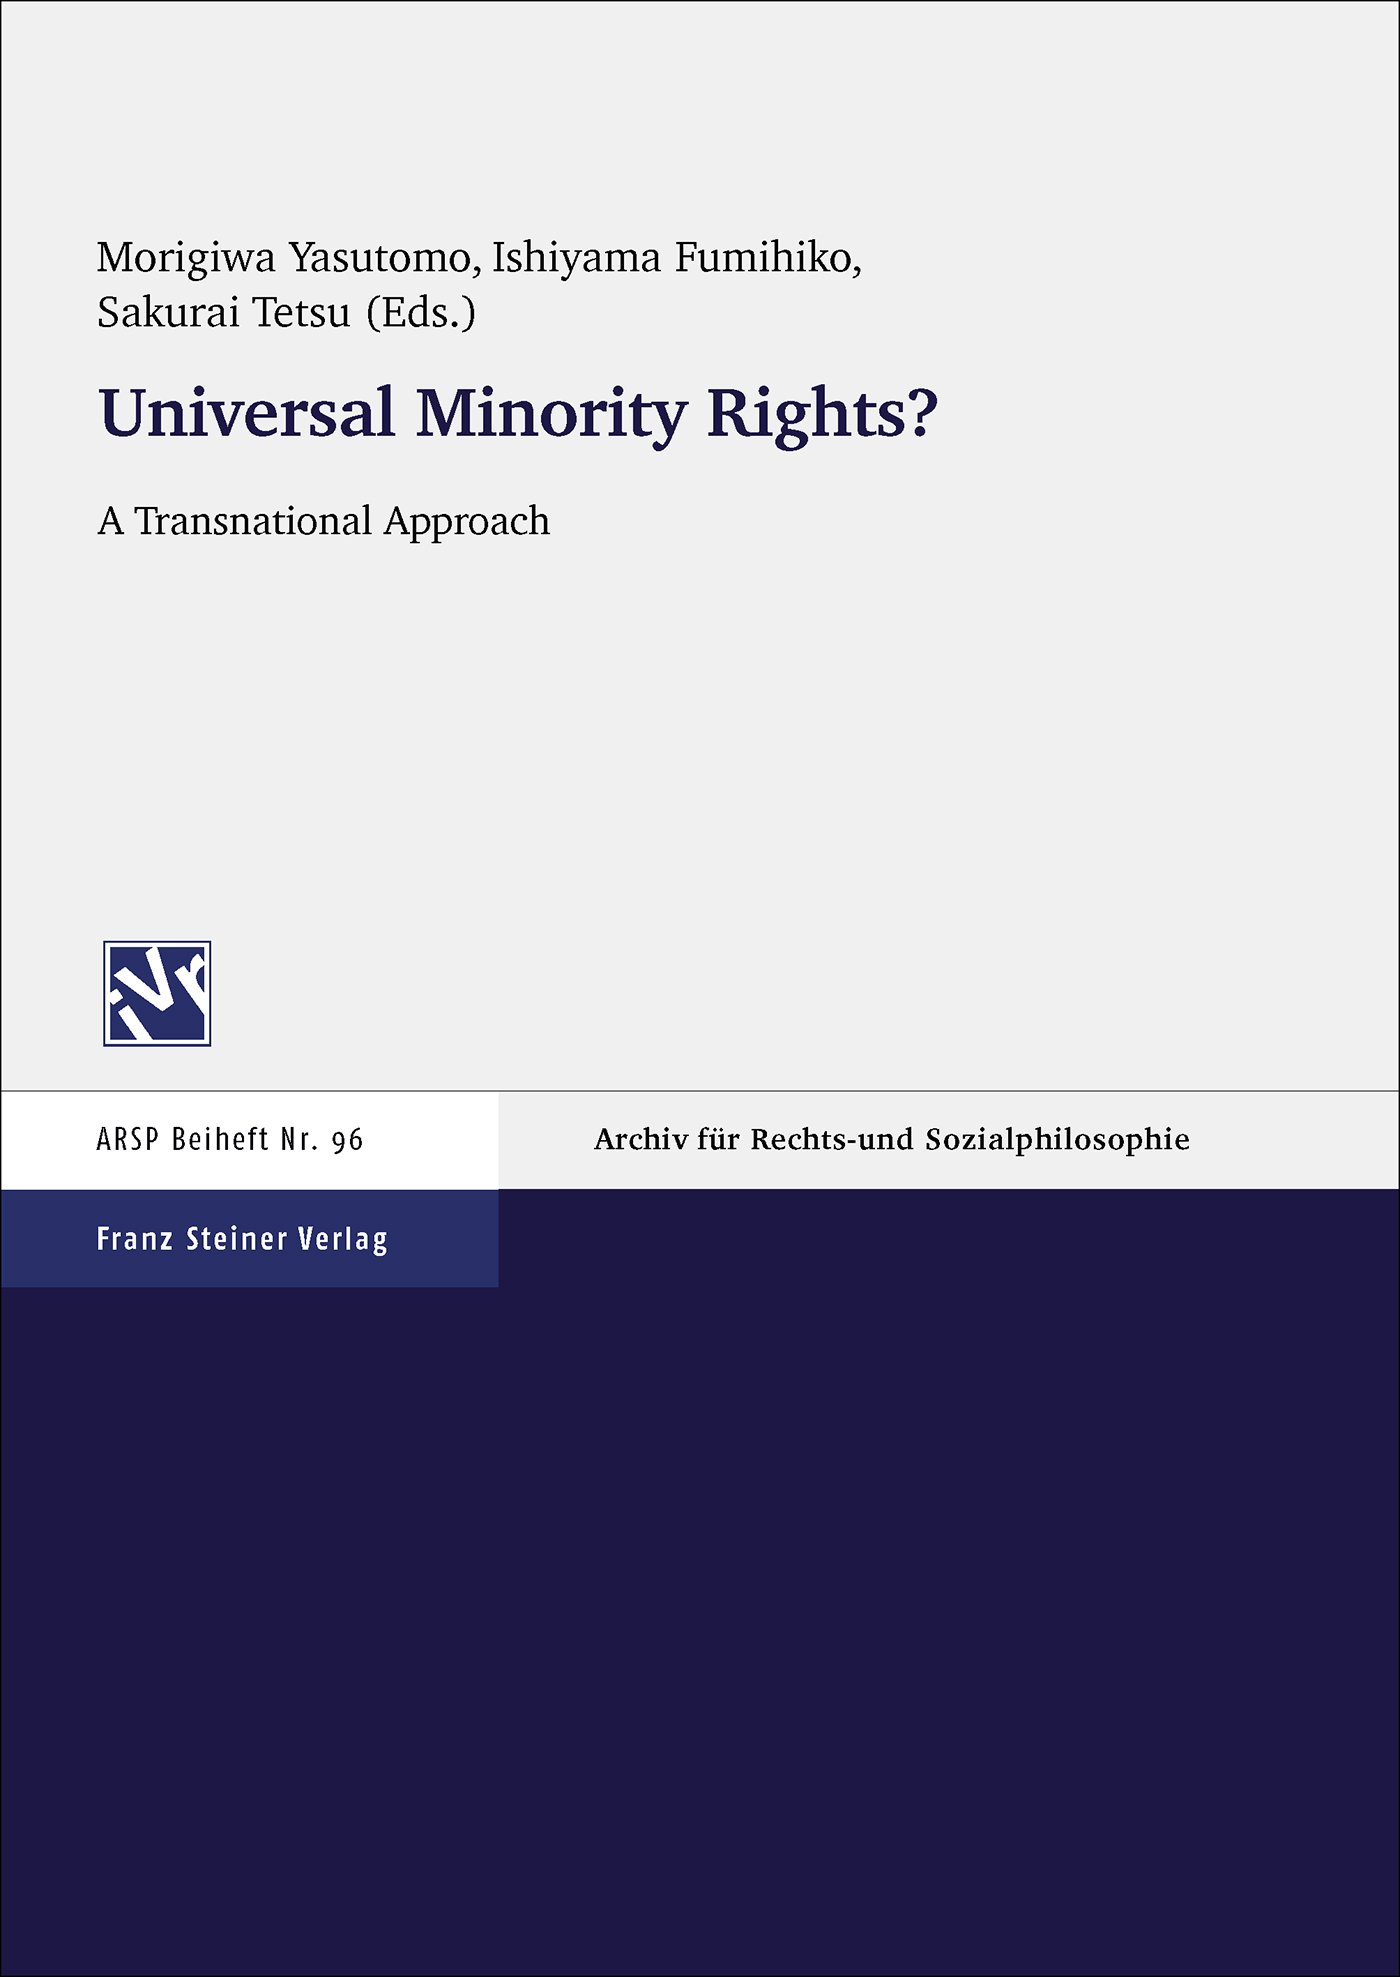 Universal Minority Rights? A Transnational Approach